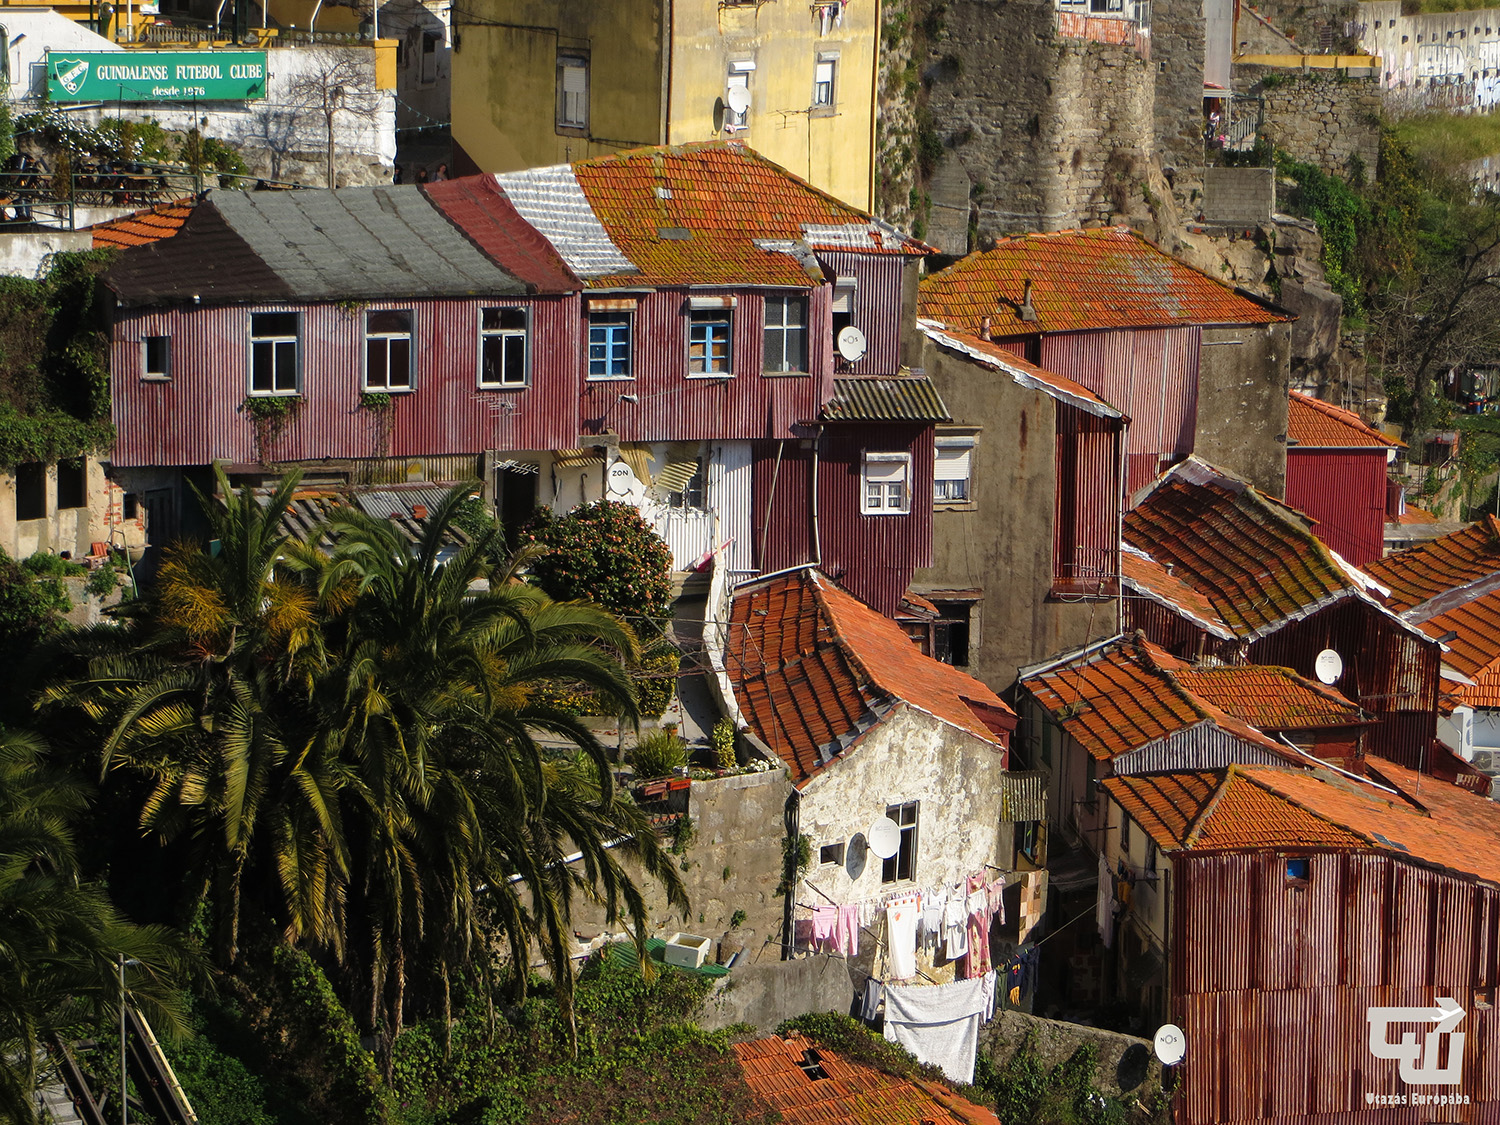 06_favela_porto_portugalia_portugal_utazas_europaba.jpg